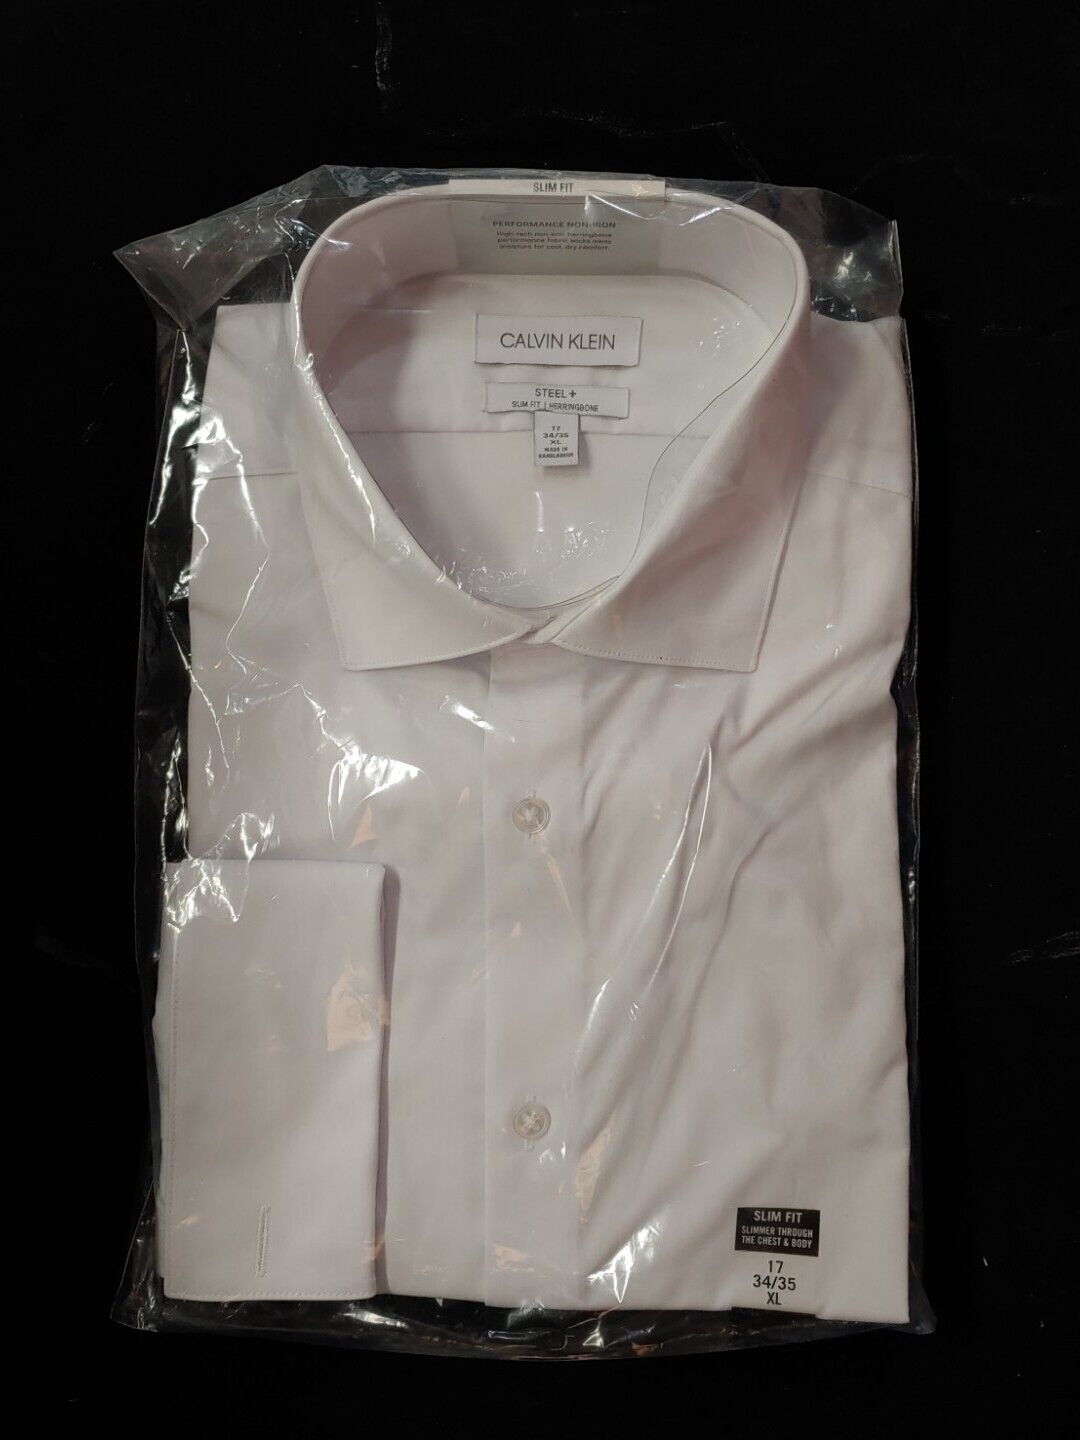 CALVIN KLEIN STEEL Slim Non-Iron Herringbone French Cuff Dress Shirt 17  34/35 Wt | eBay